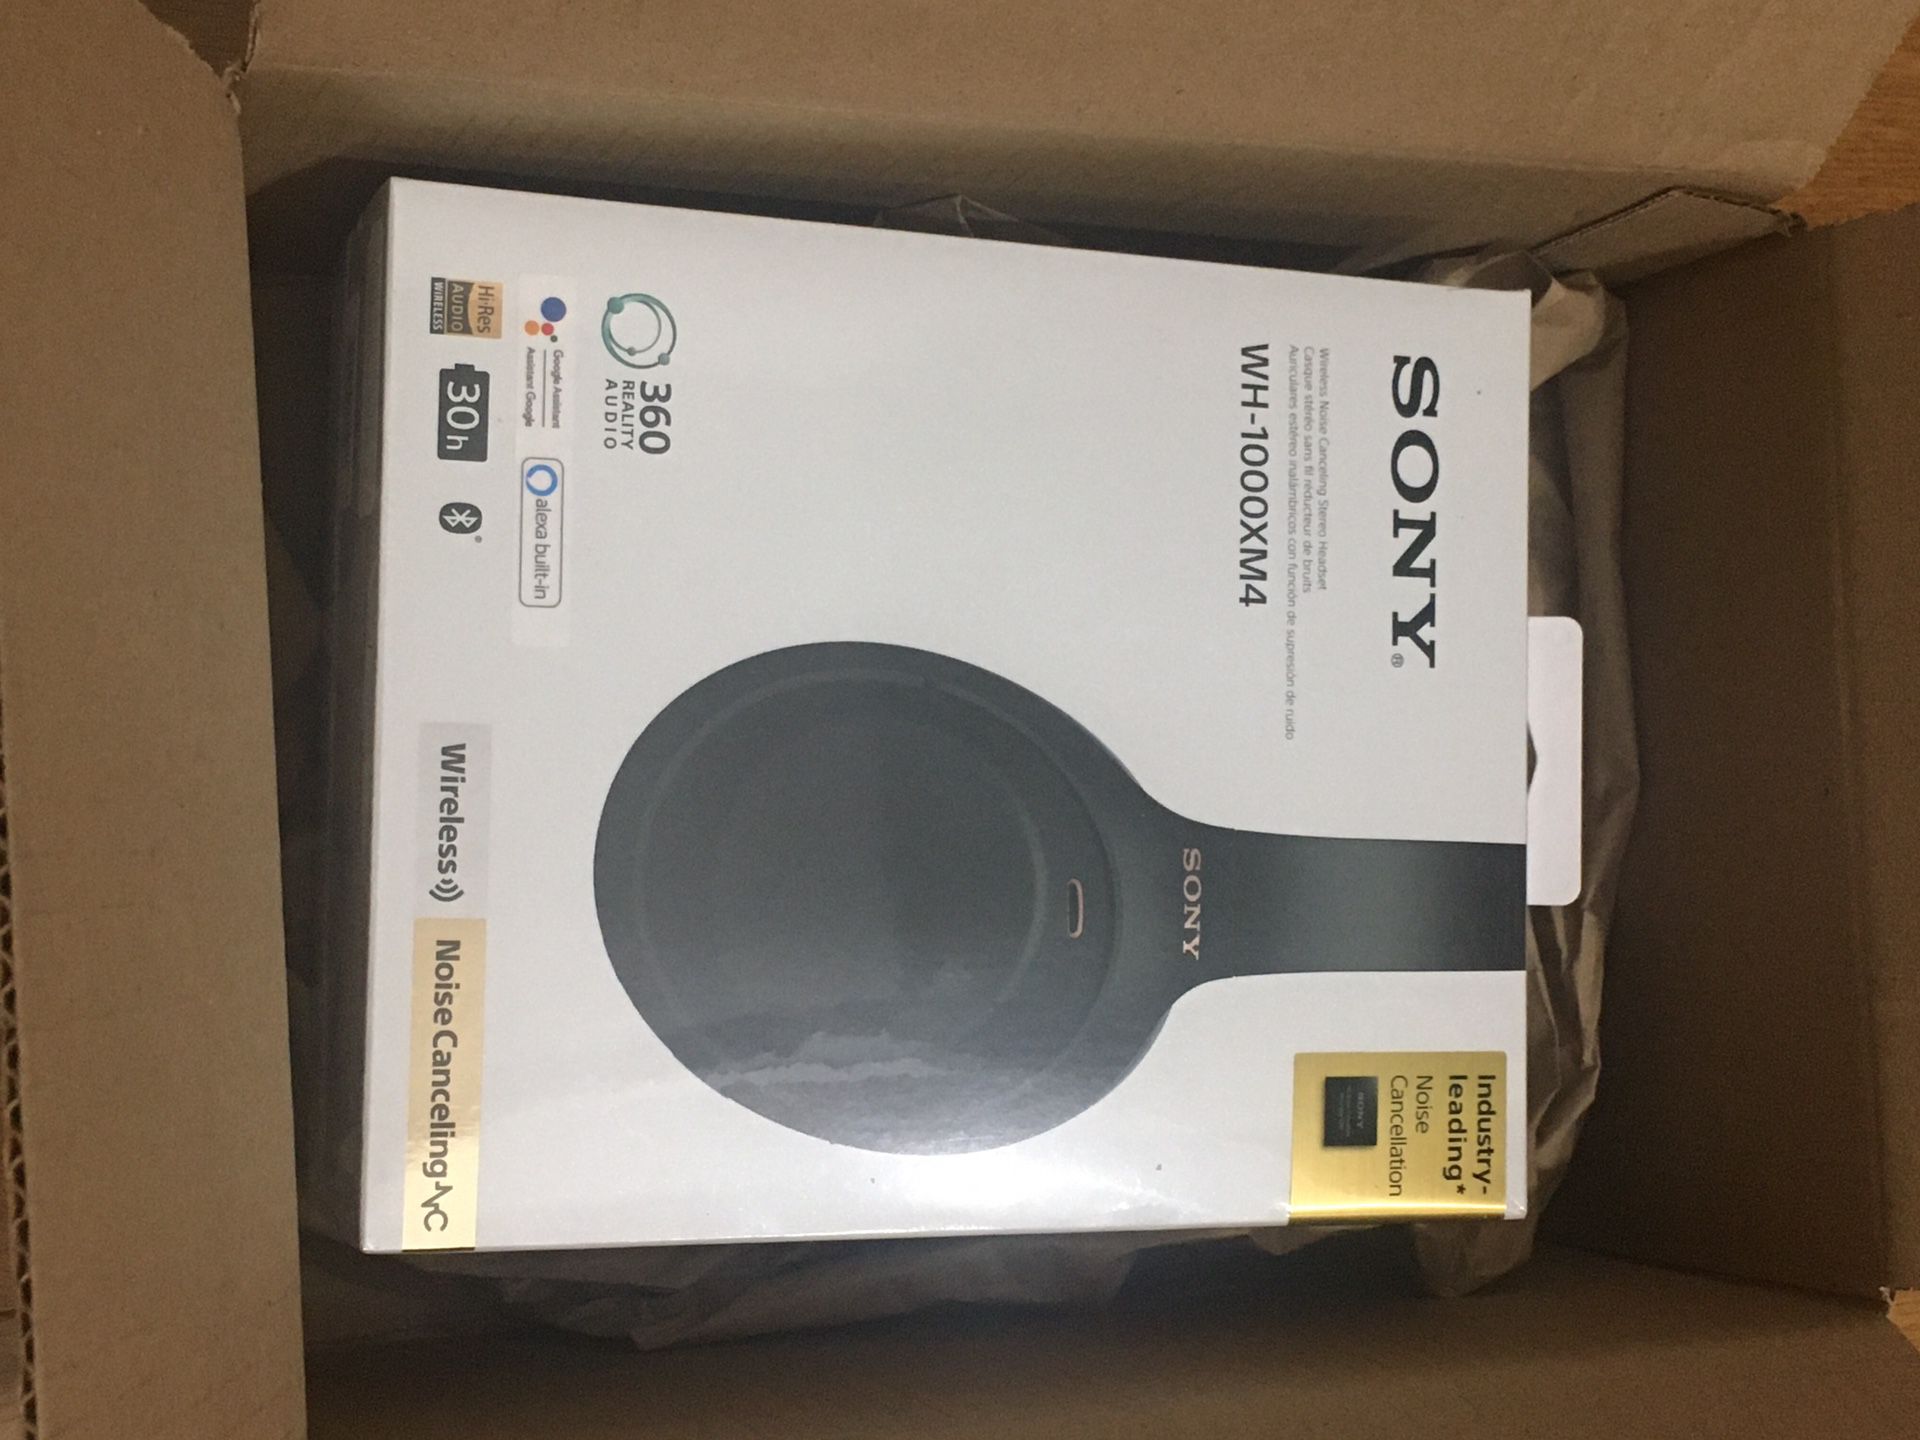 Sony WH-1000XM4 noise cancellation headphones